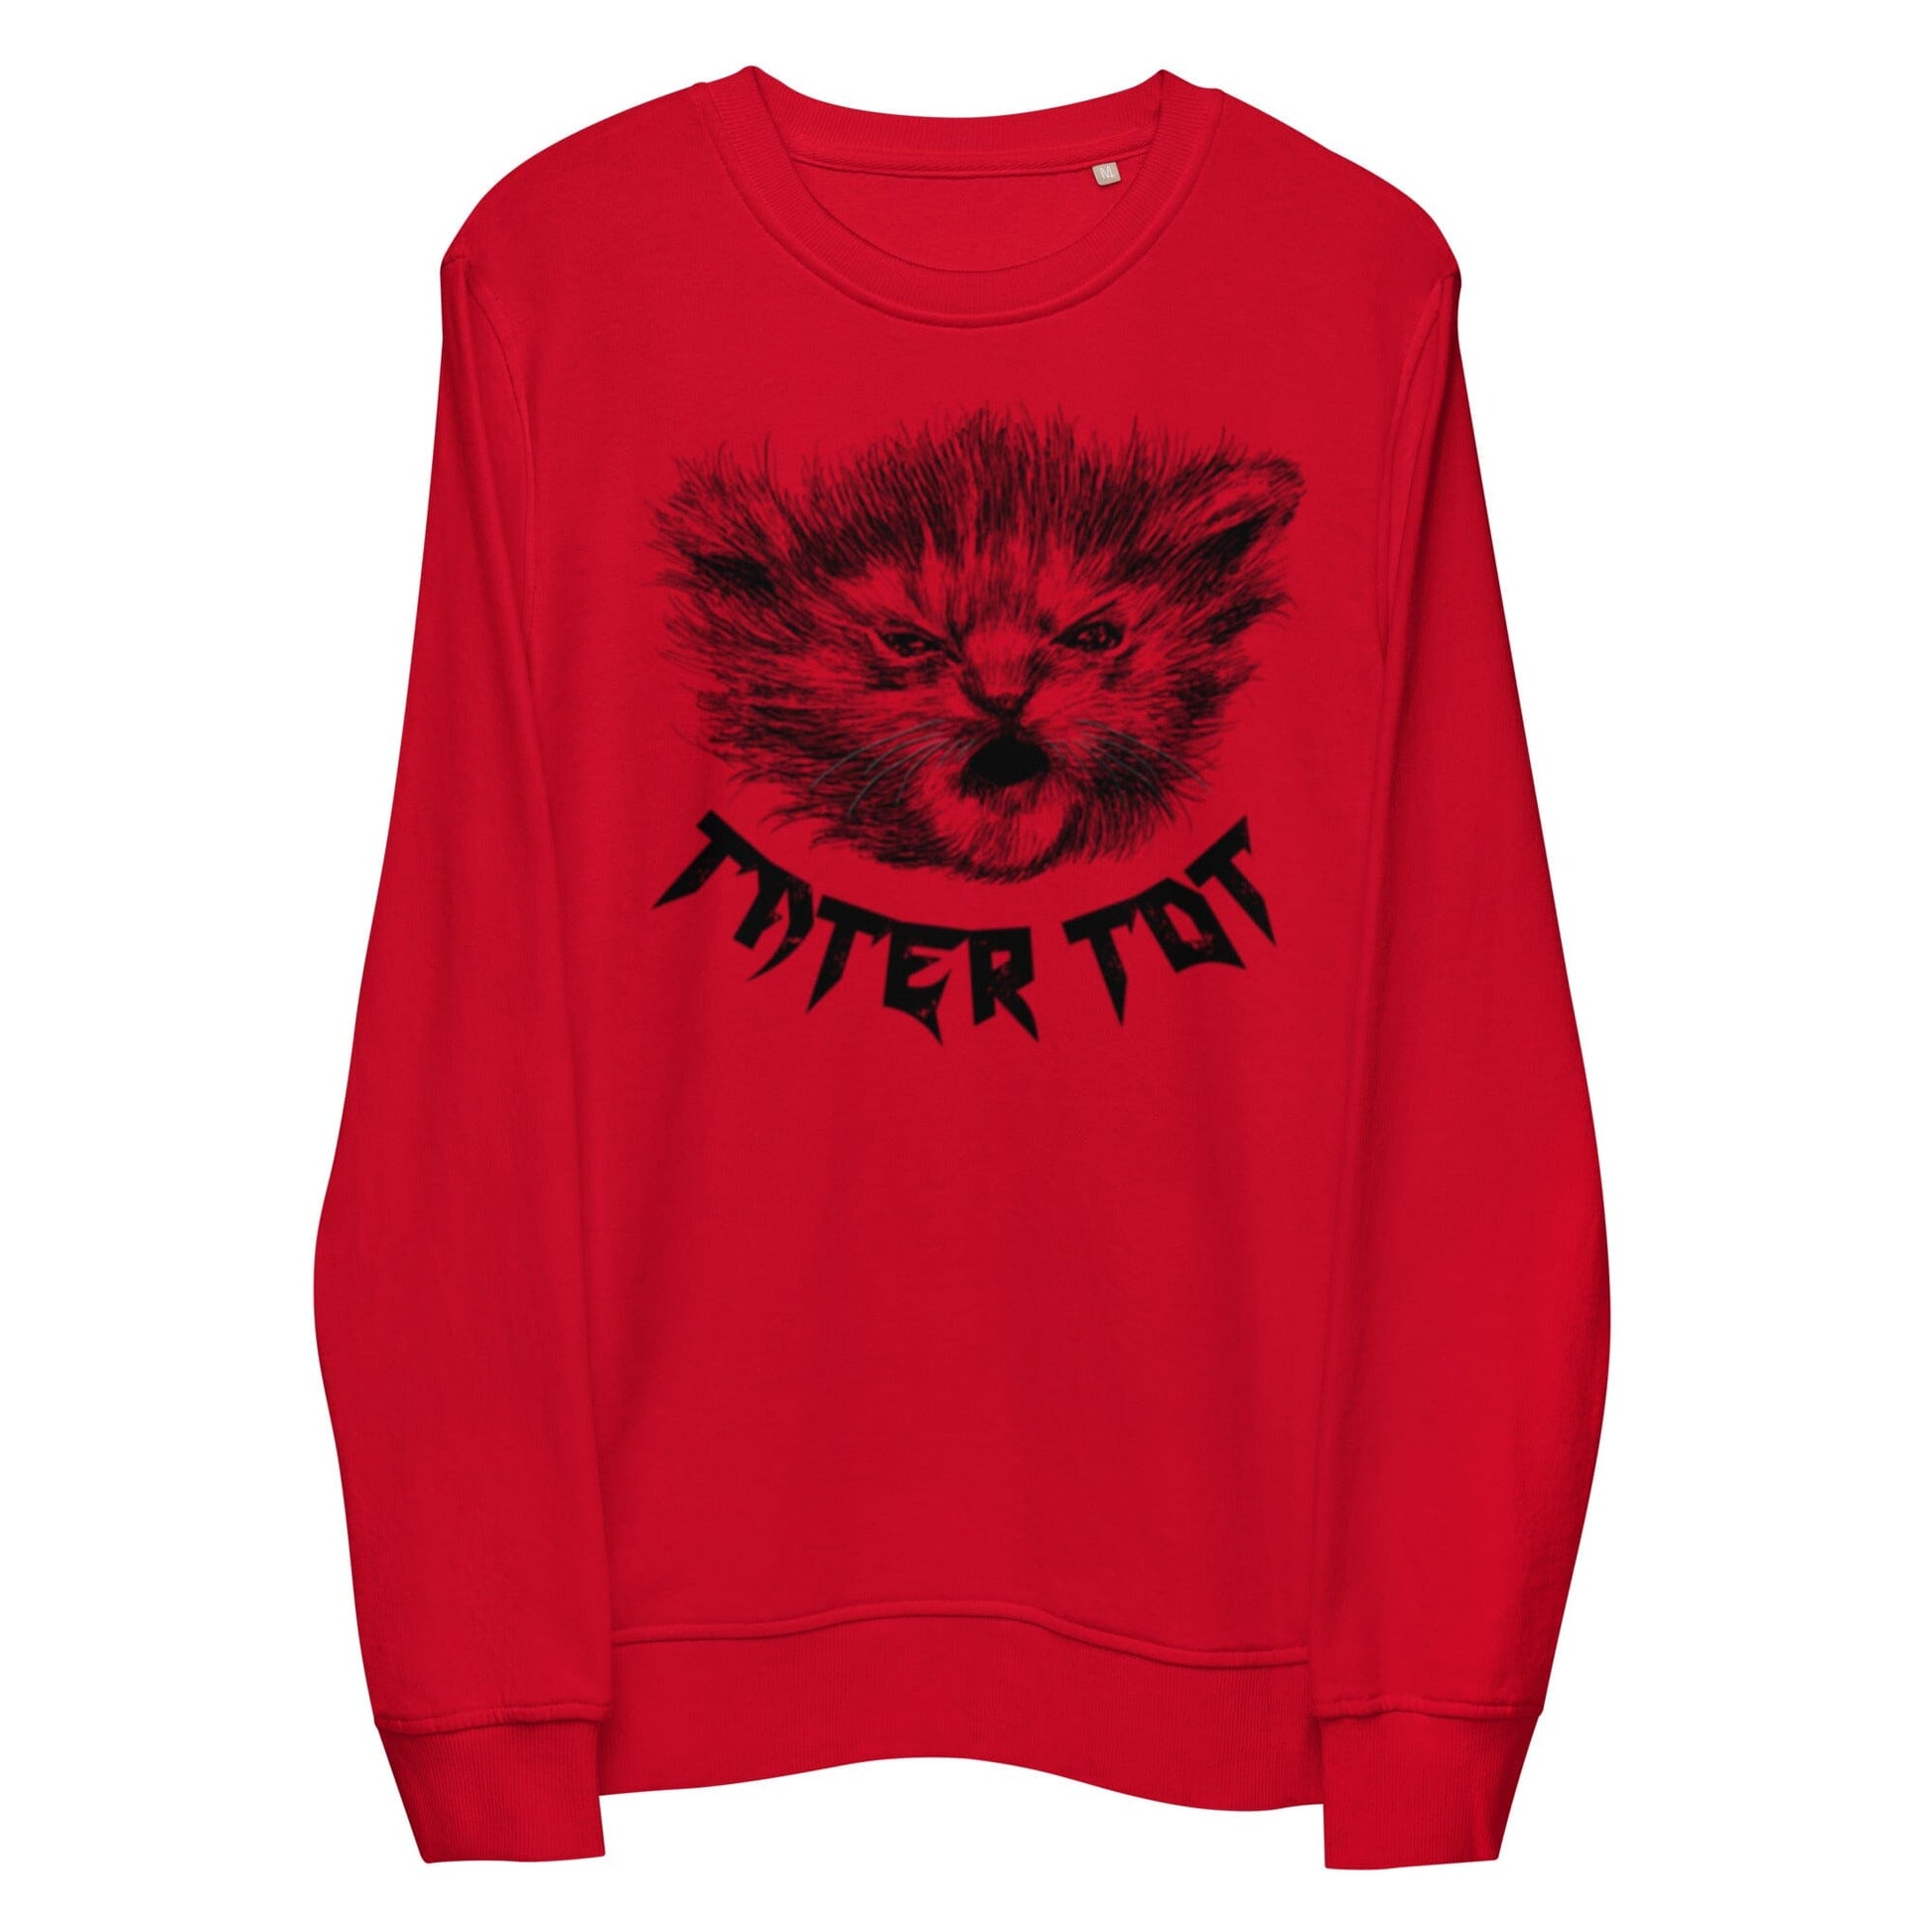 Metal Tater Tot Sweatshirt [Unfoiled] (All net proceeds go to Kitty CrusAIDe) JoyousJoyfulJoyness Red S 